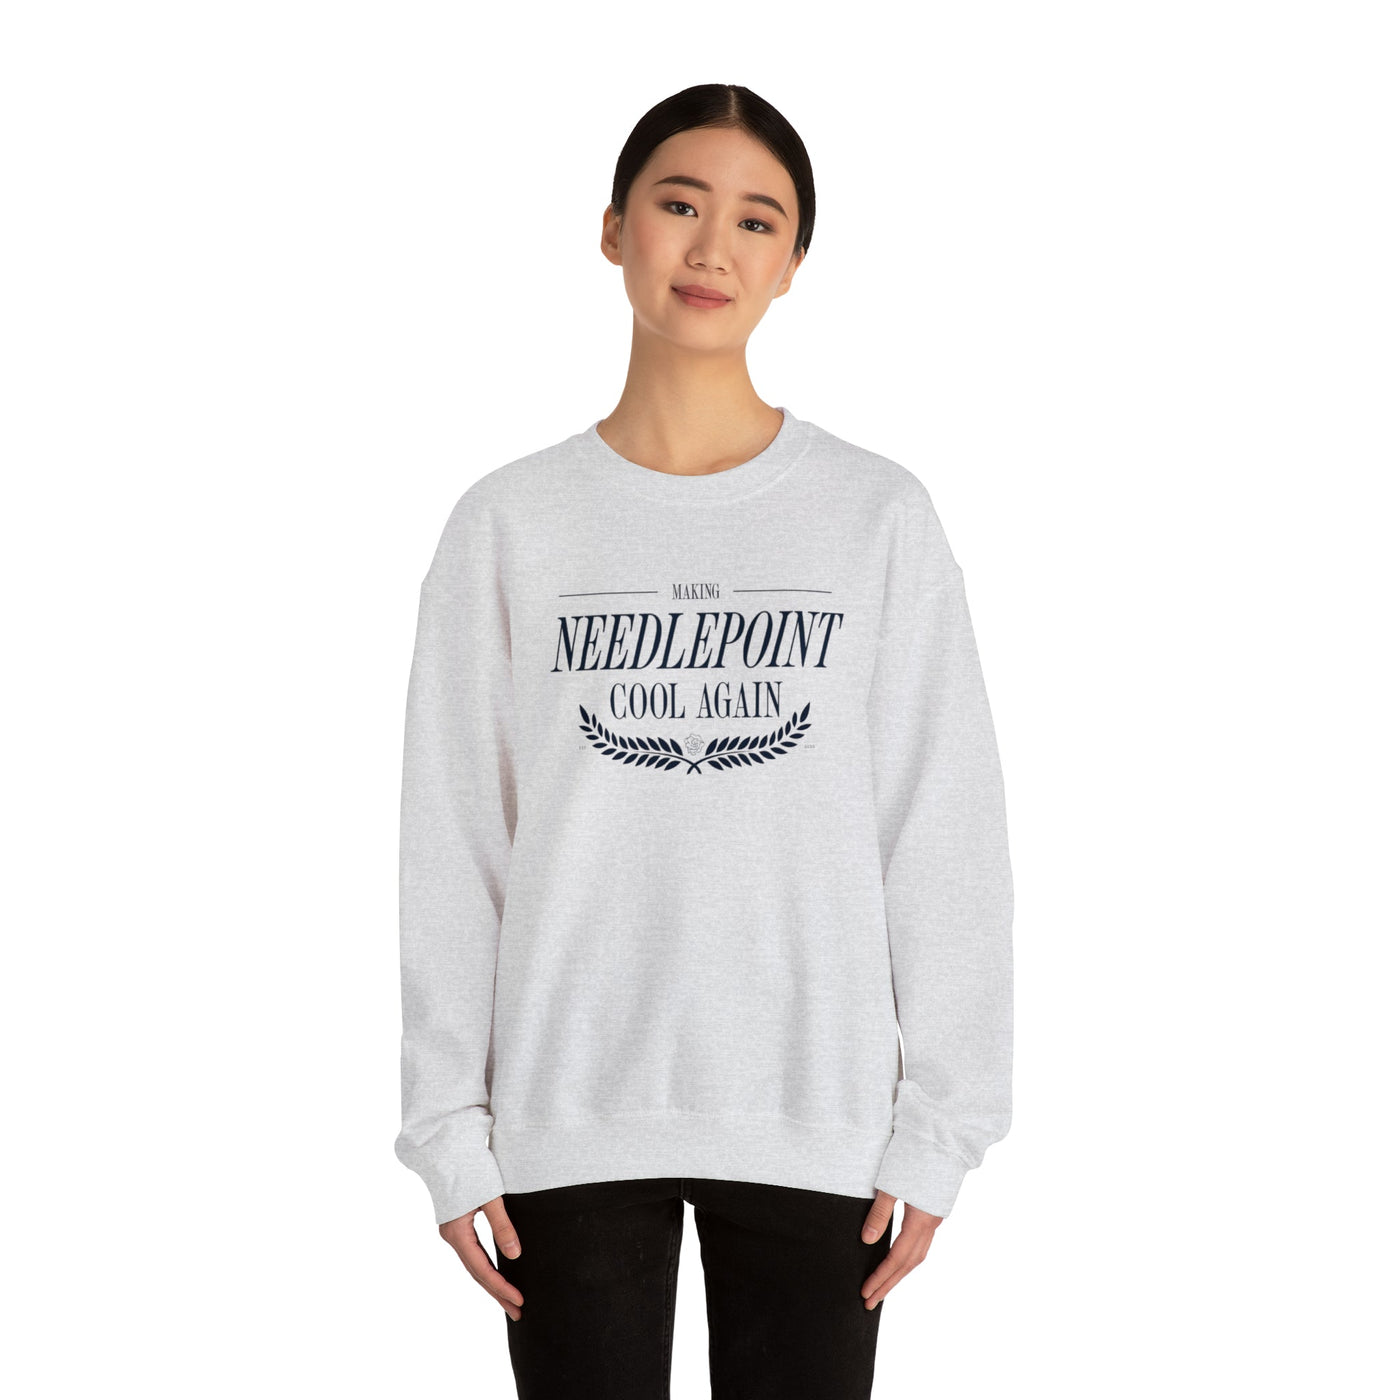 Making Needlepoint Cool Crewneck Sweatshirt - Penny Linn Designs - Printify